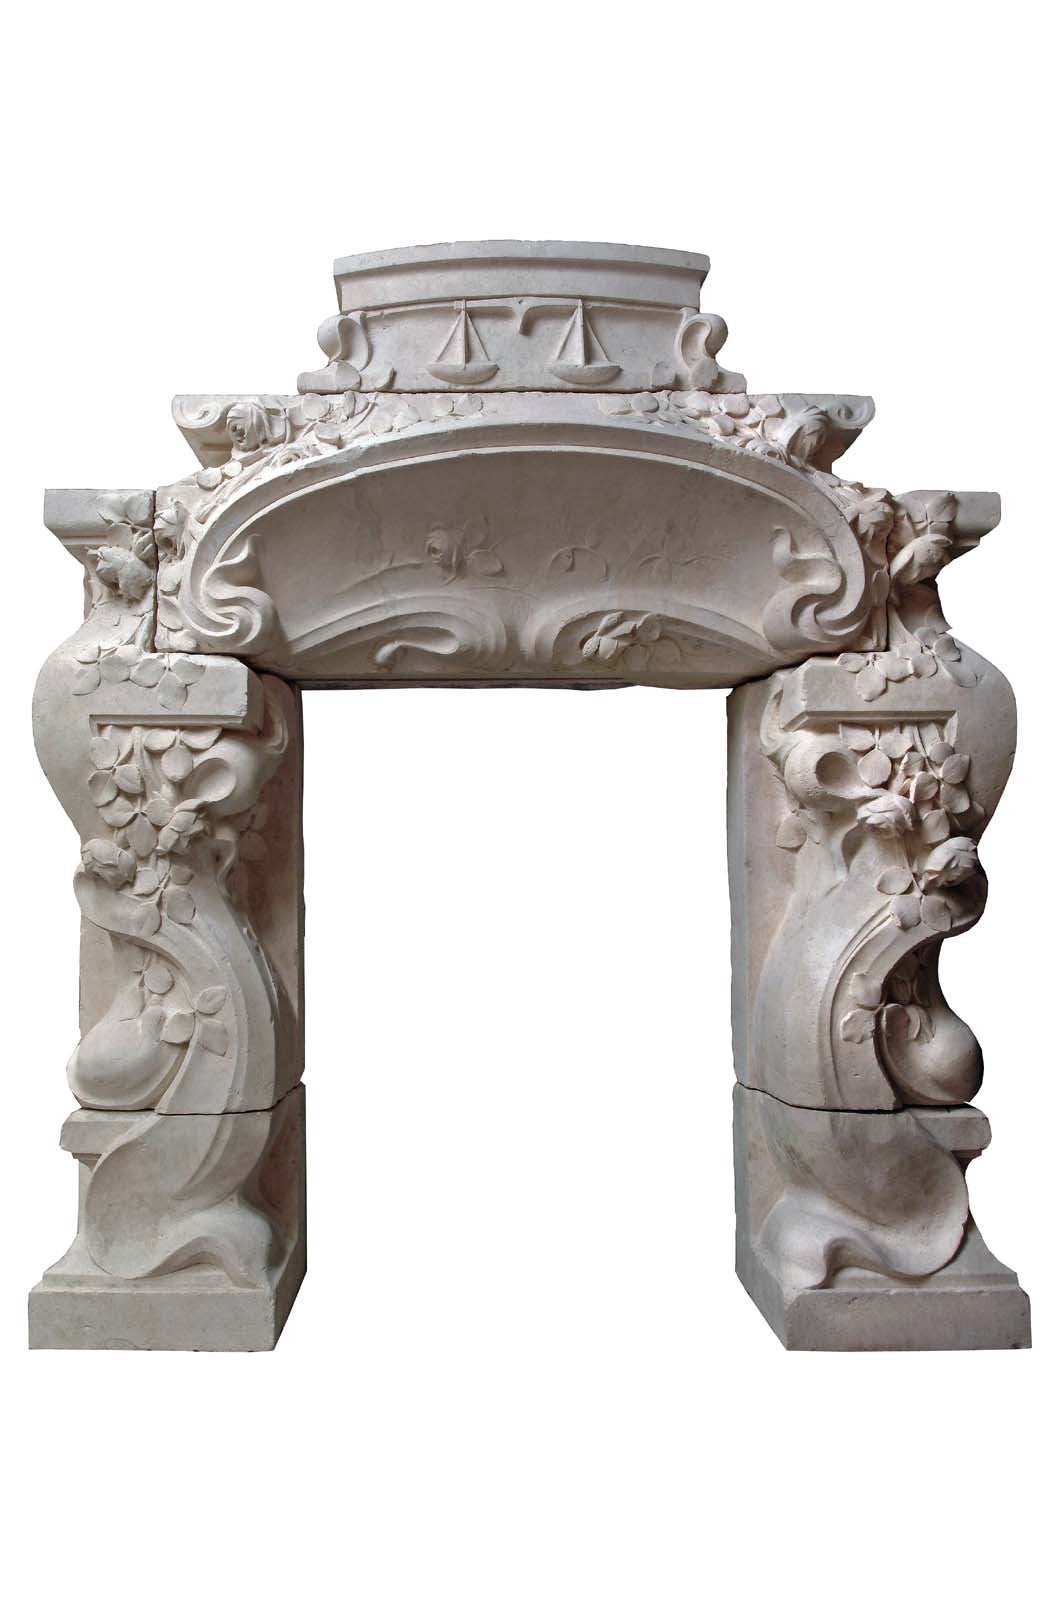 French Art Nouveau Period Limestone Fireplace, circa 1900 For Sale